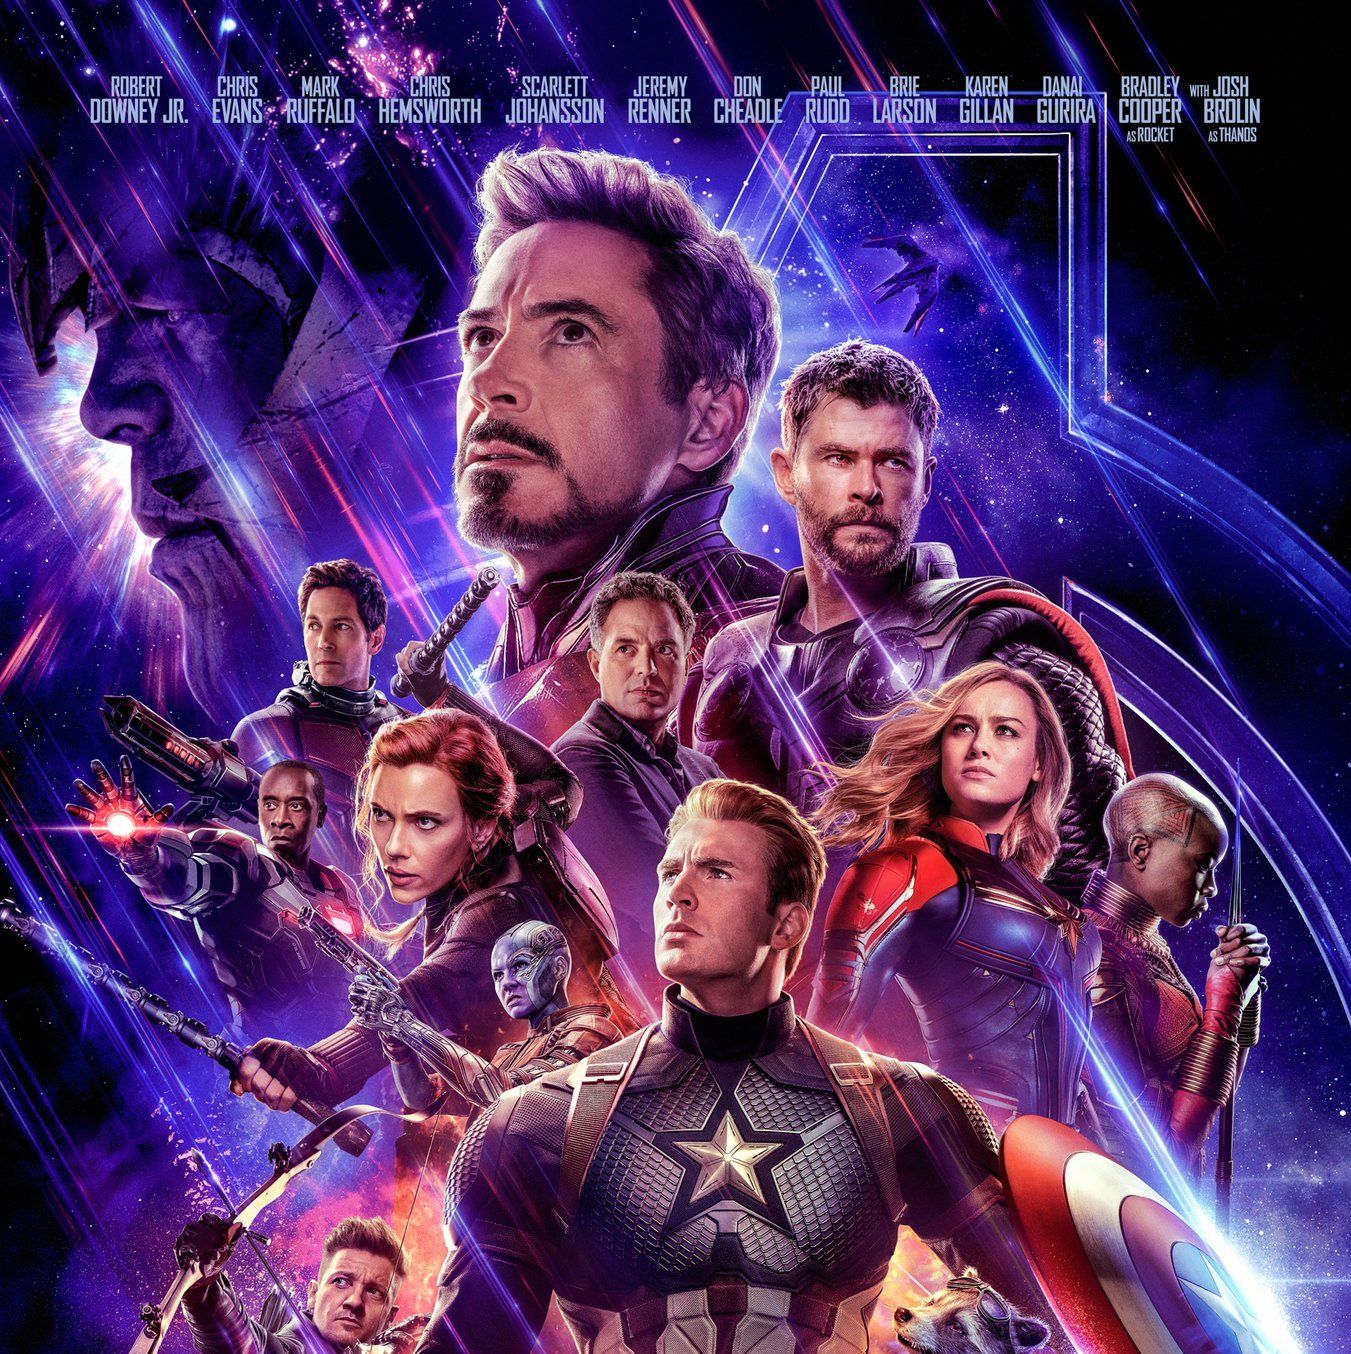 Endgame  Marvel posters, Marvel entertainment, Marvel movies